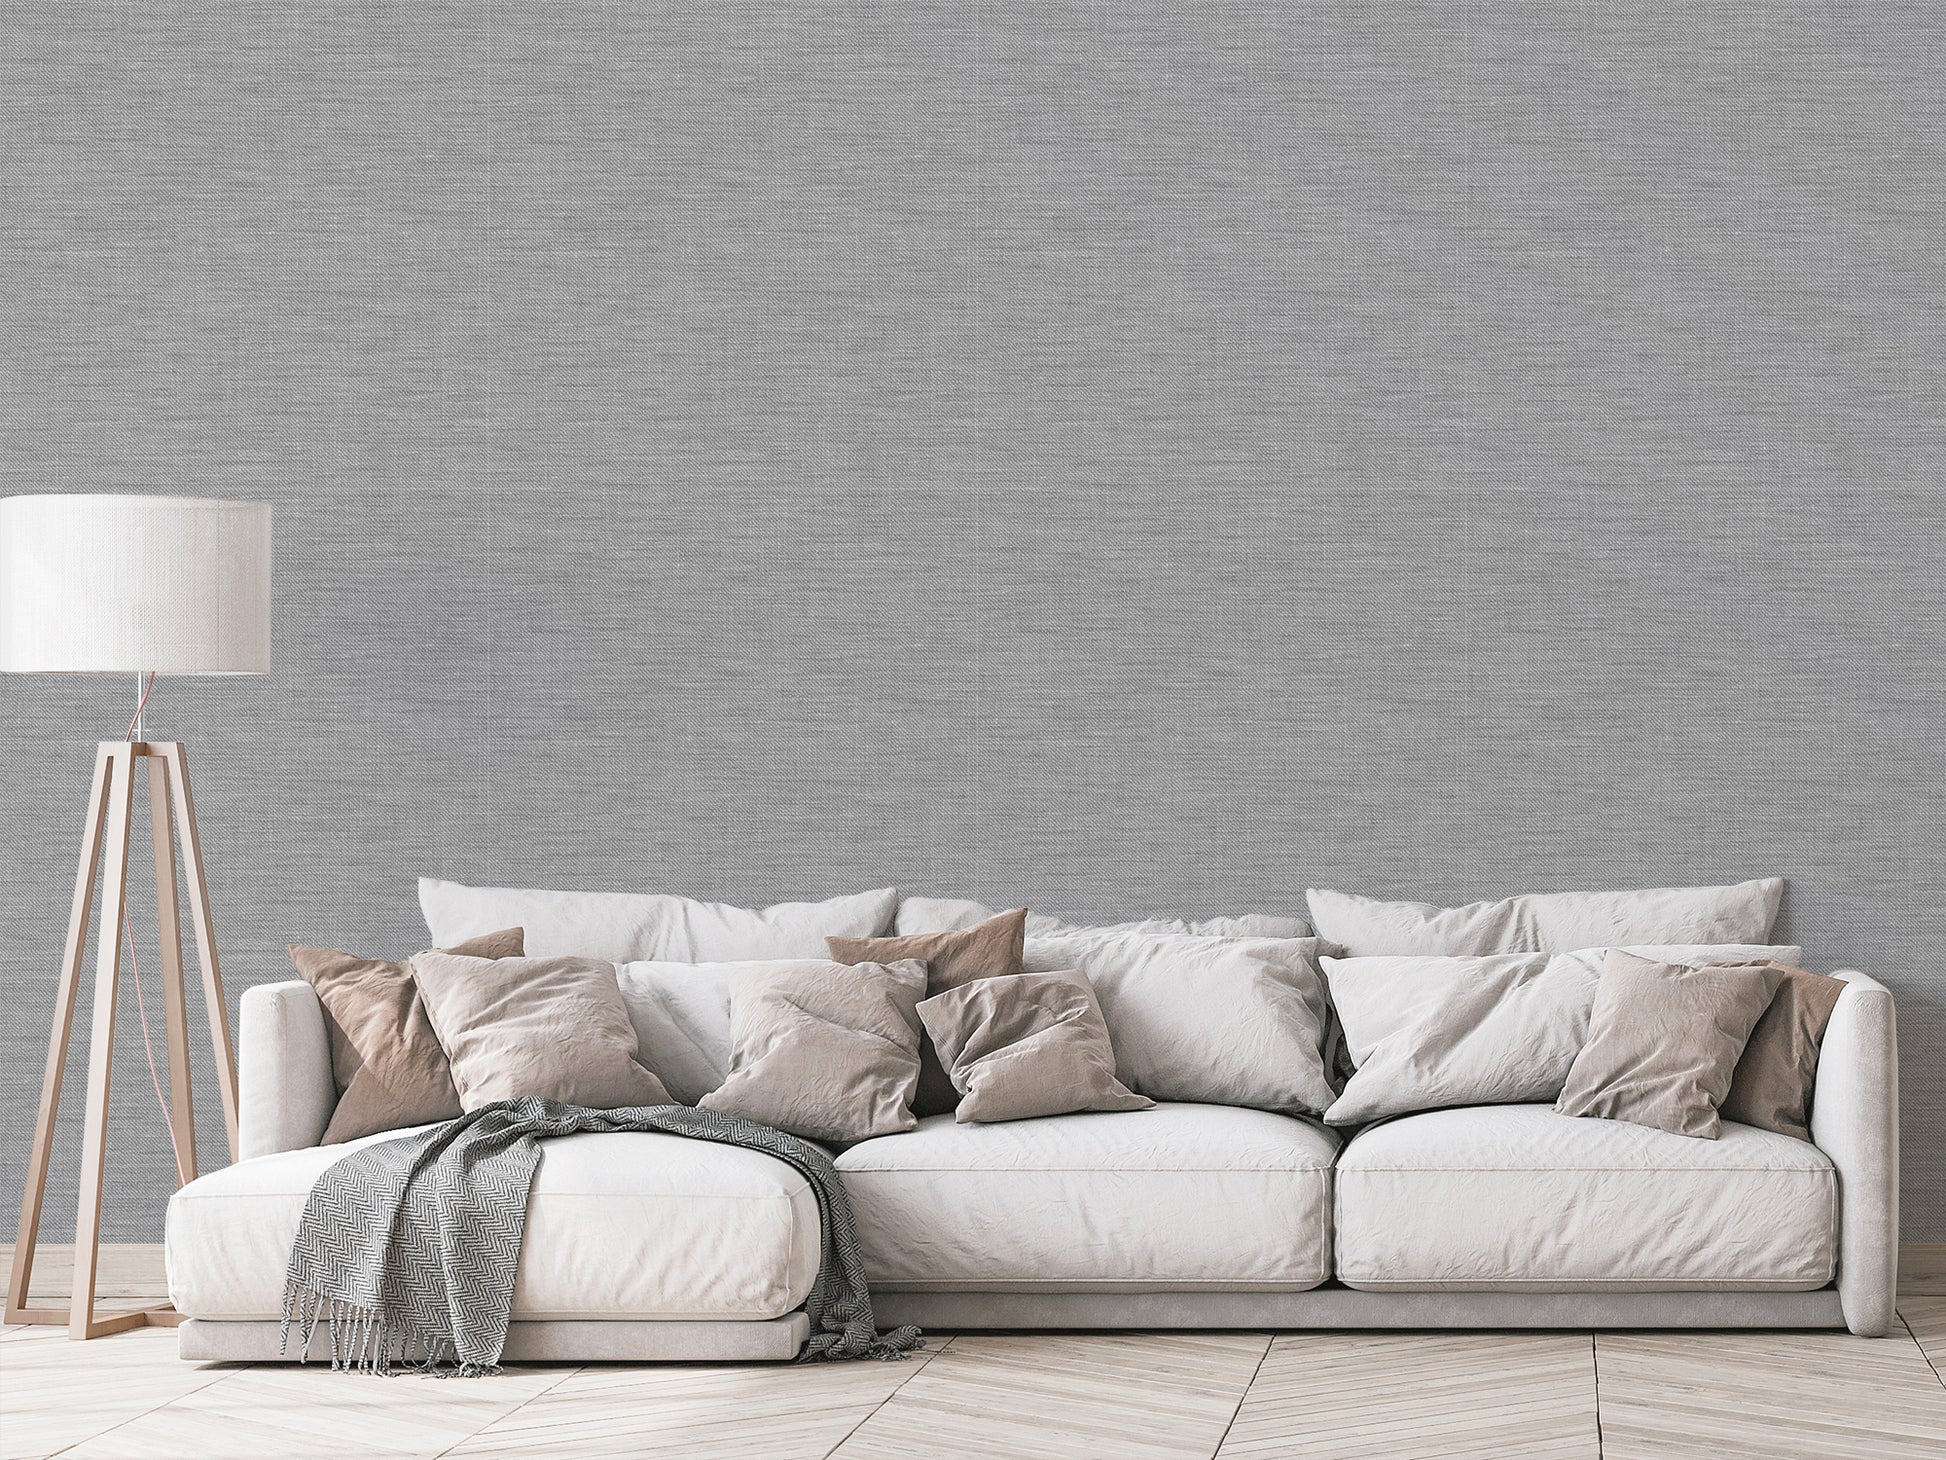 Eira Modern living room design, white sofa and wooden floor lamp, panorama